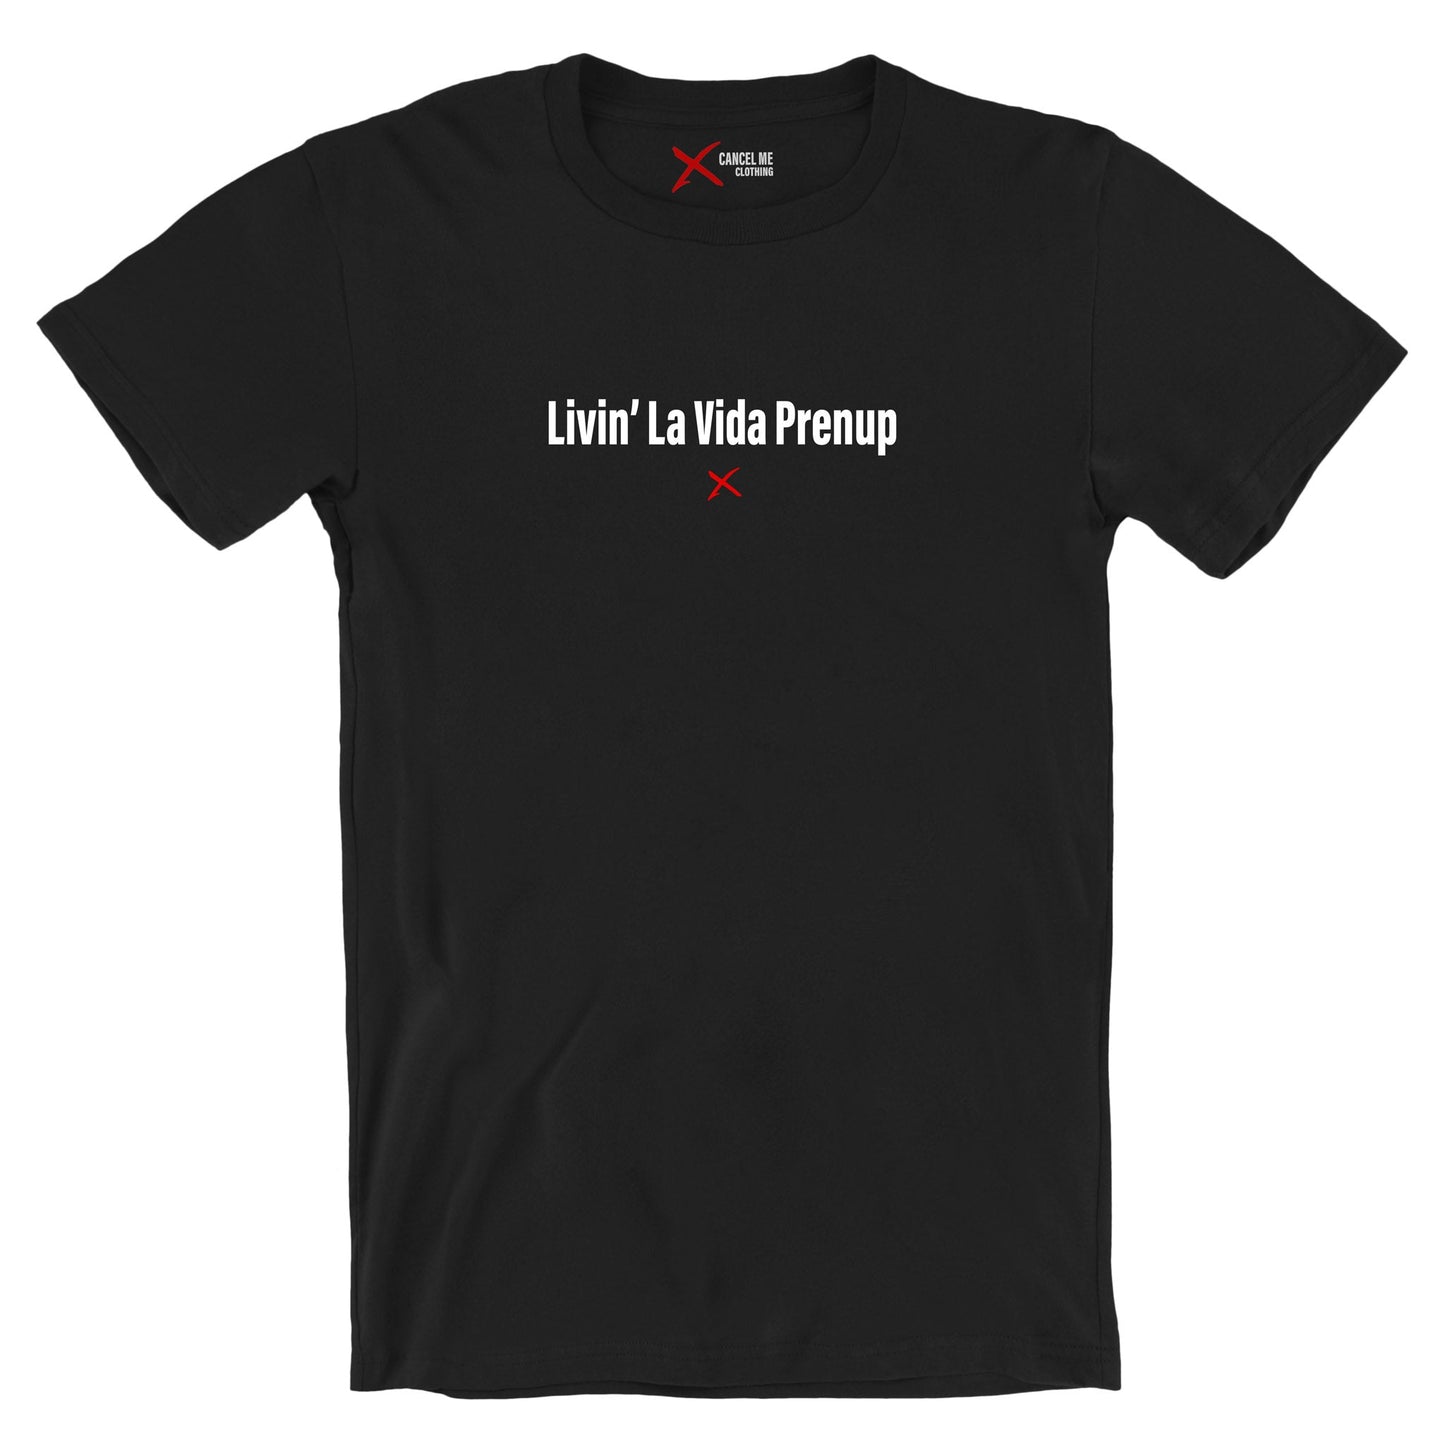 Livin' La Vida Prenup - Shirt